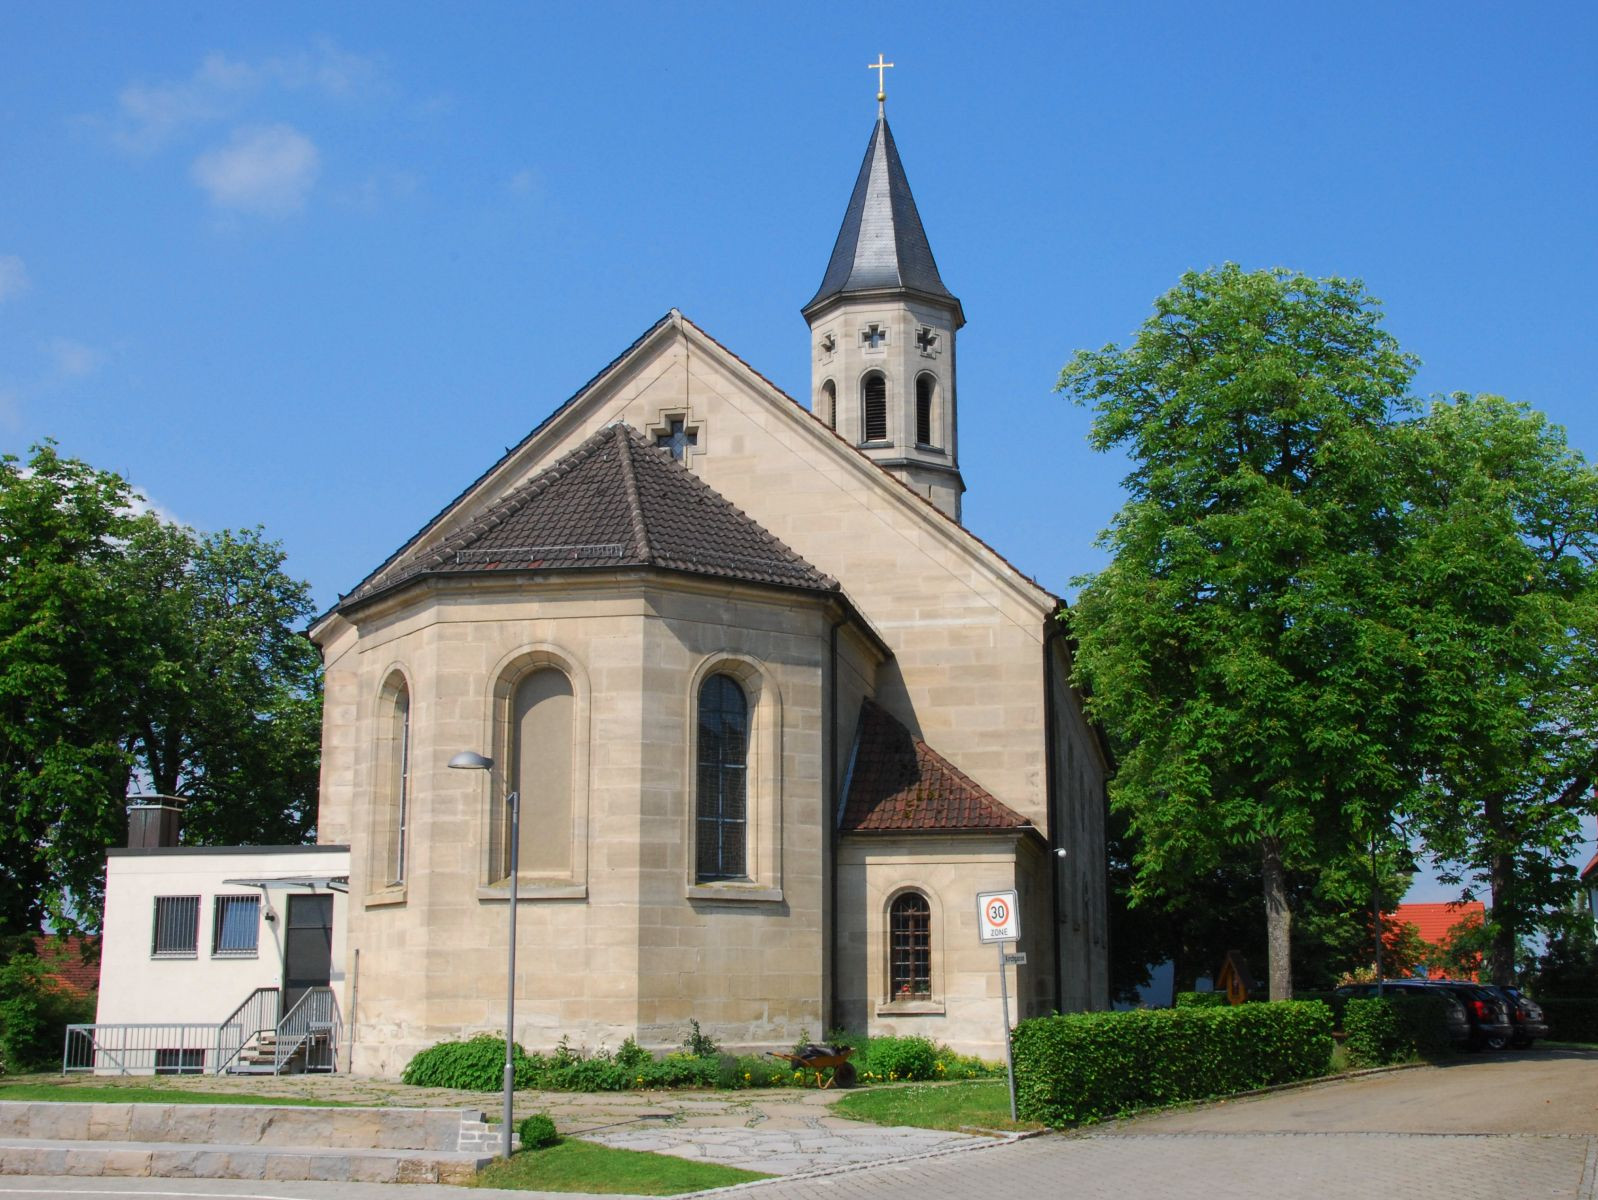 St. Martinuskirche